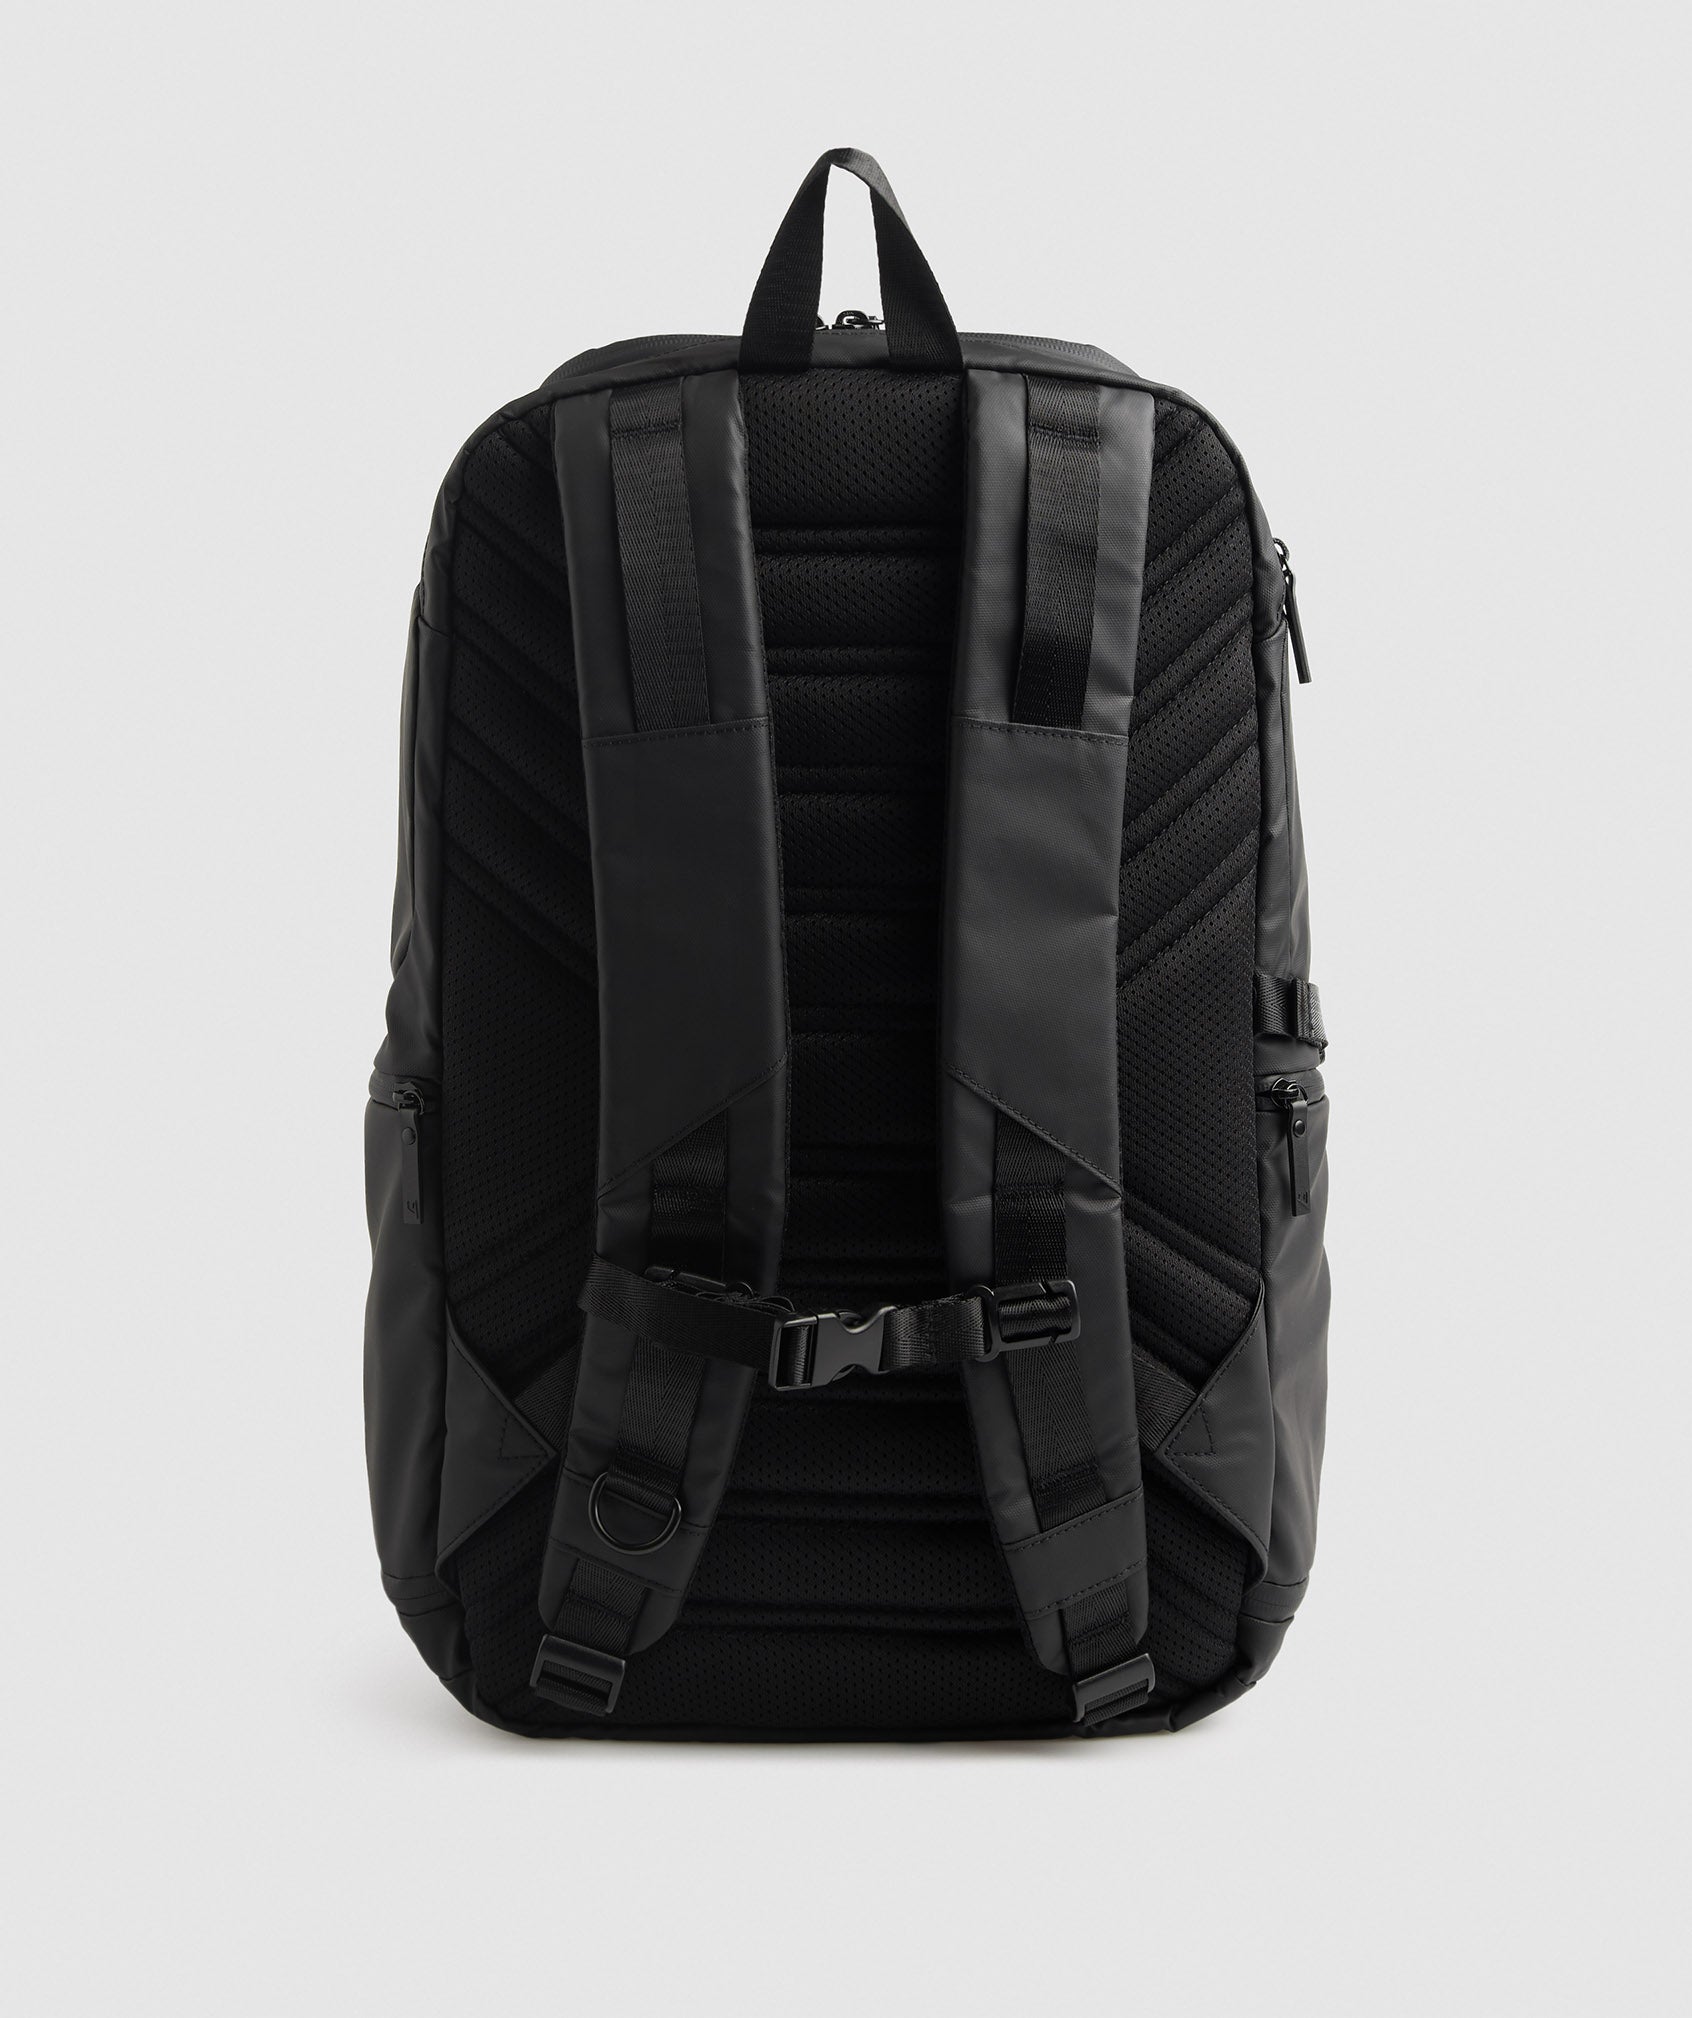 X-Series 0.3 Backpack in Black - view 6